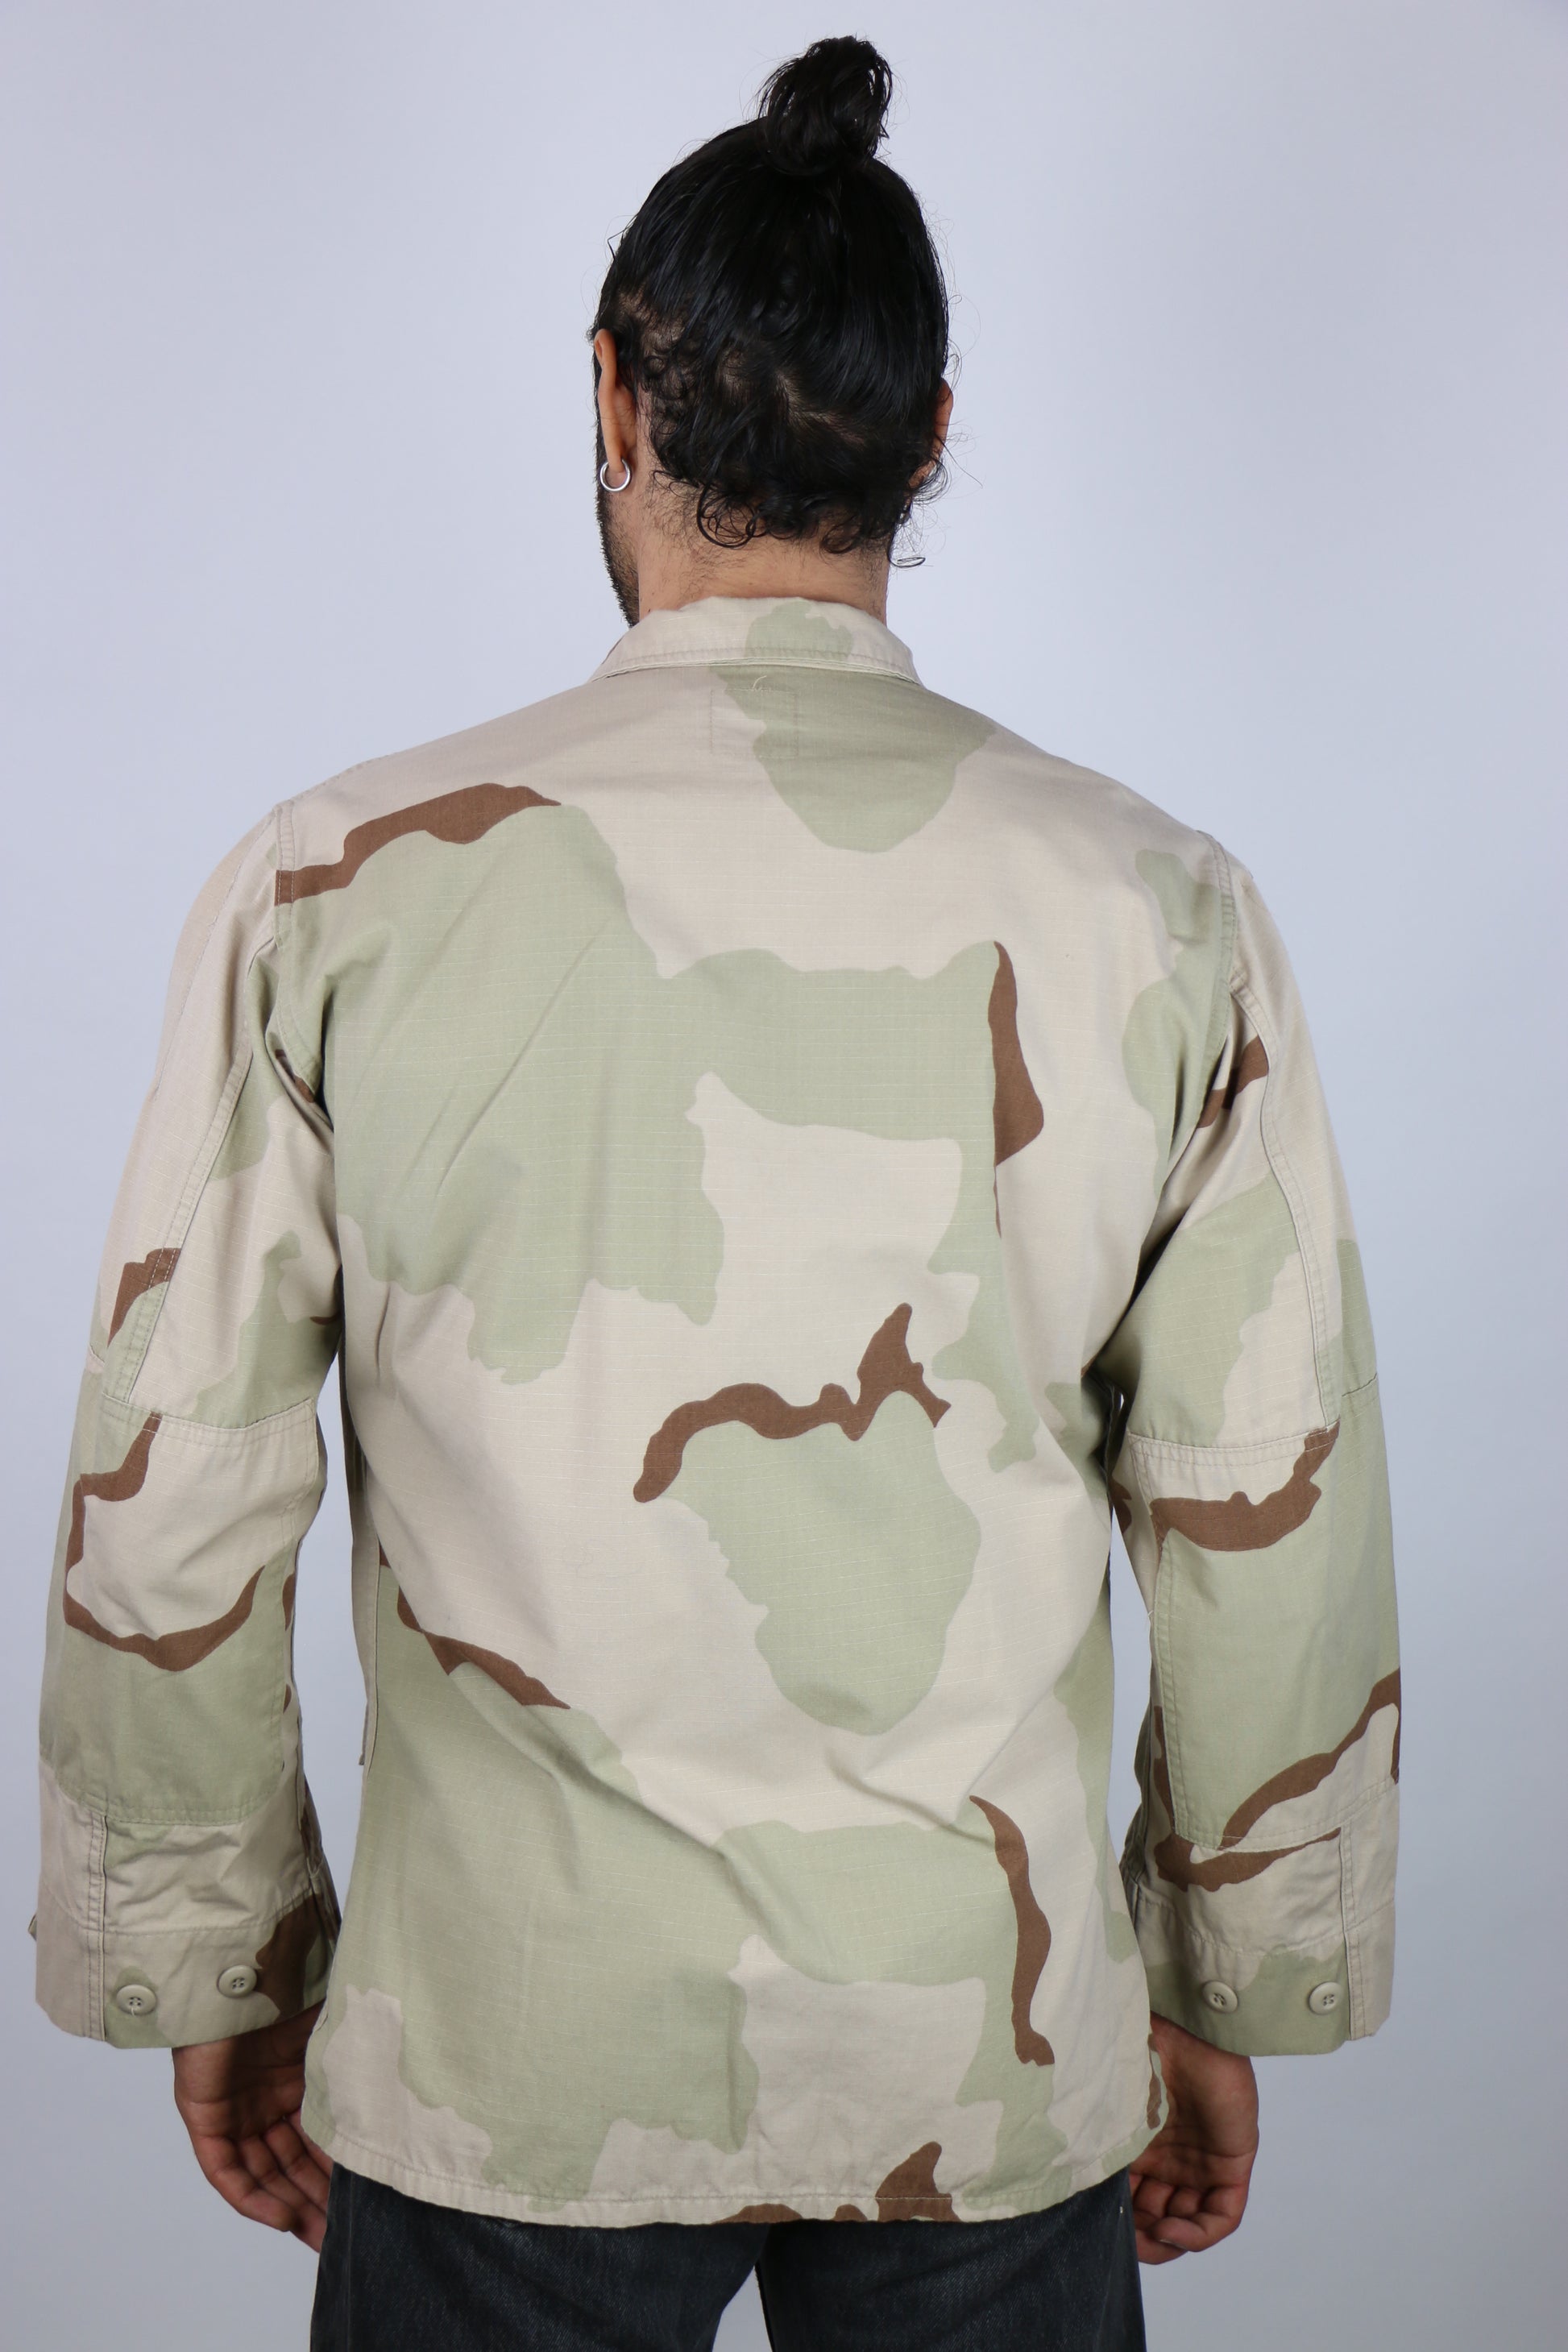 US Army Vintage Desert Camouflage Pattern Combat Jacket